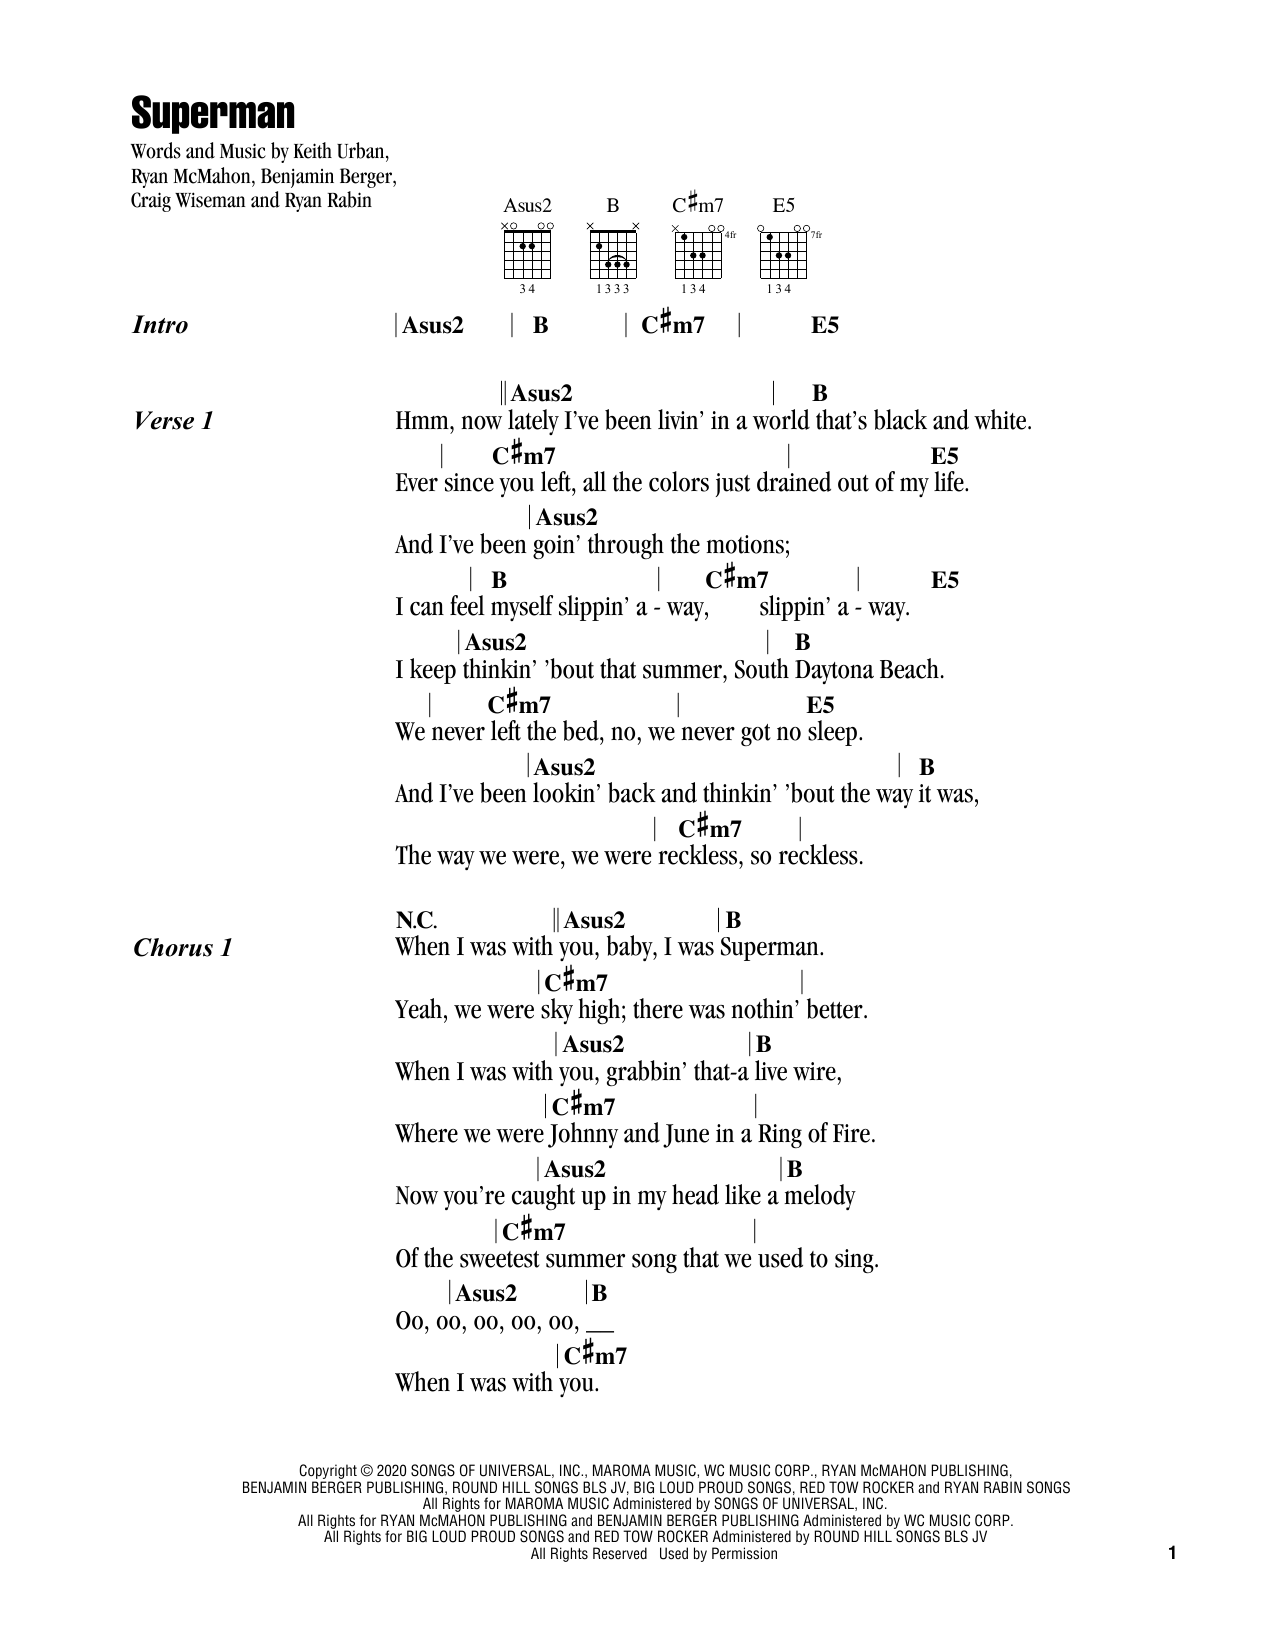 Keith Urban Superman Sheet Music Notes & Chords for Guitar Chords/Lyrics - Download or Print PDF